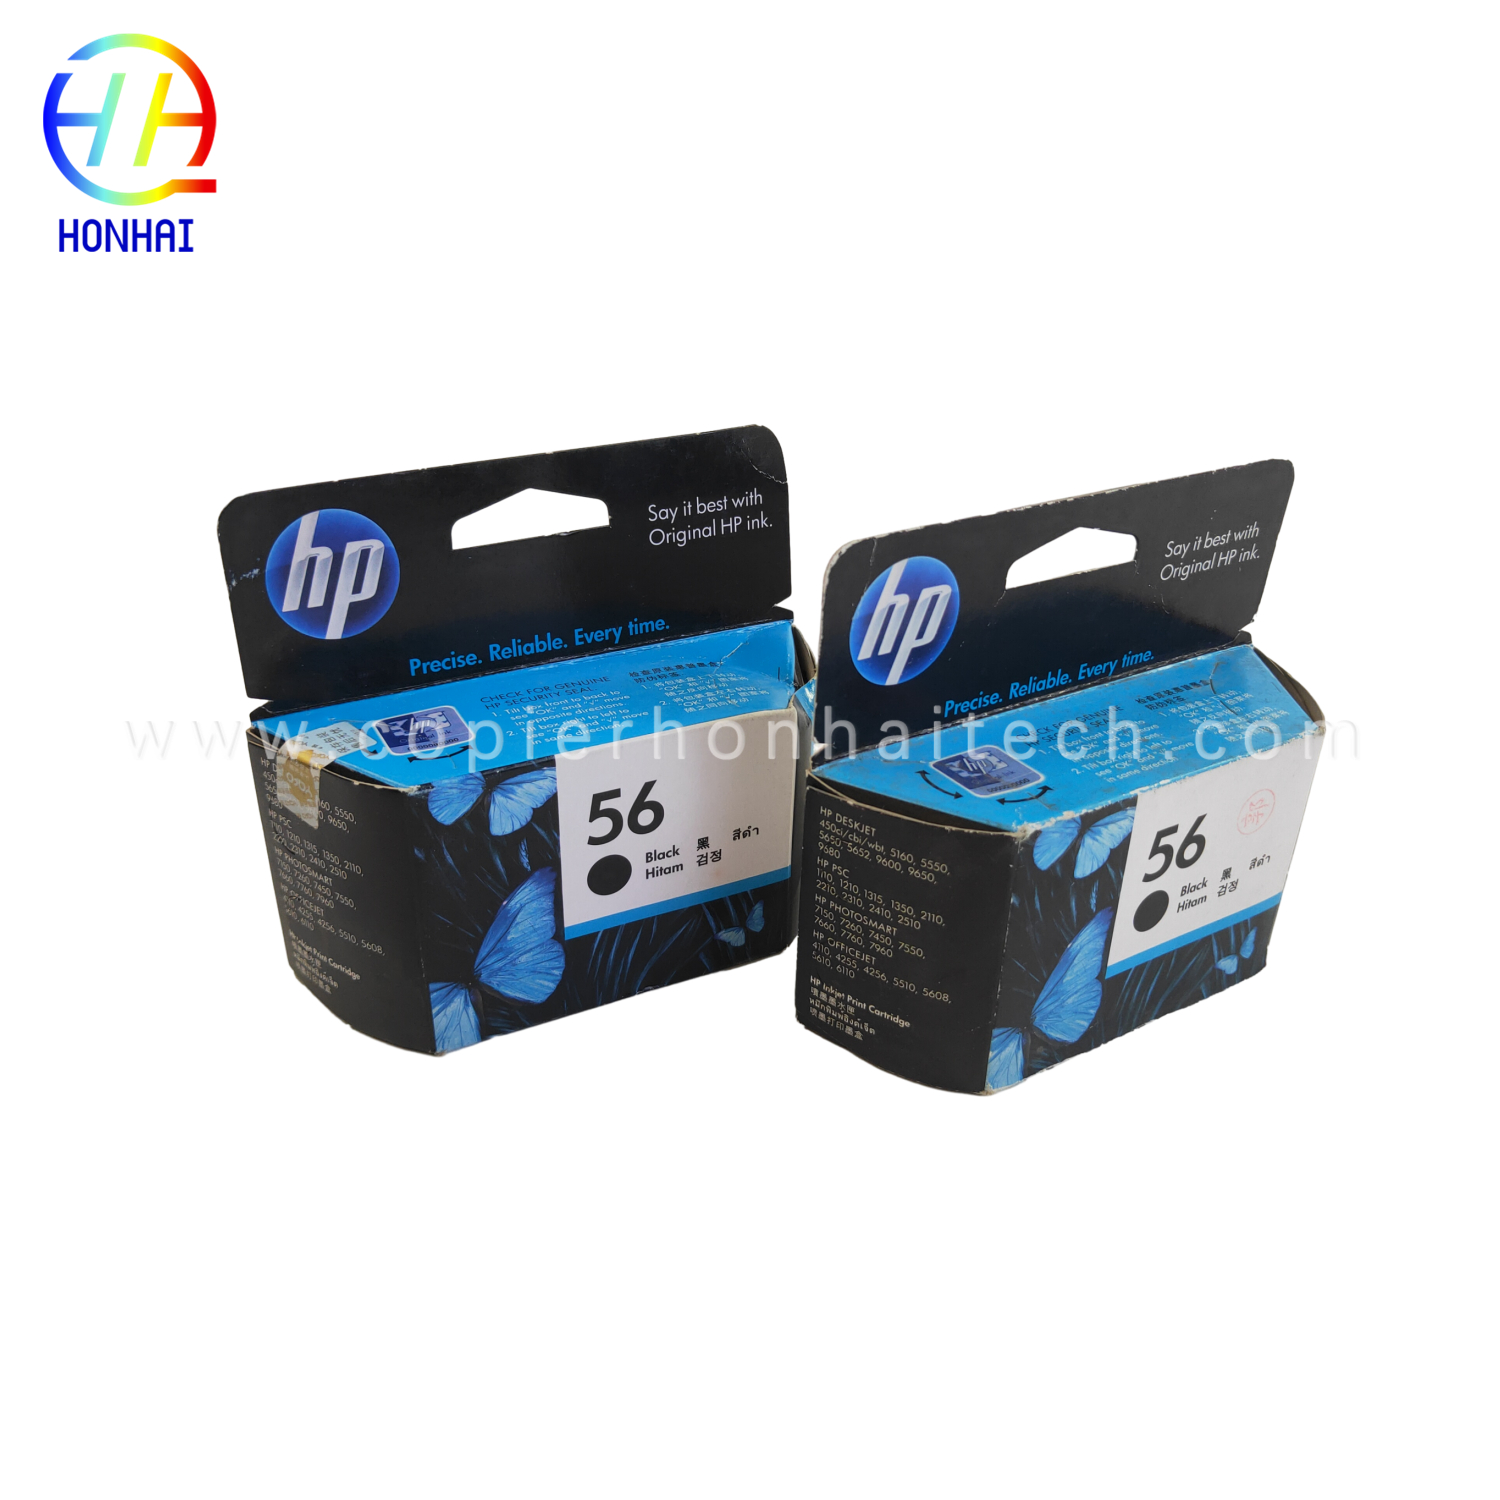 https://www.copierhonhaitech.com/original-black-printer-ink-cartridge-56-kuri-hp-deskjet-5550-5551-5552-umusaruro/